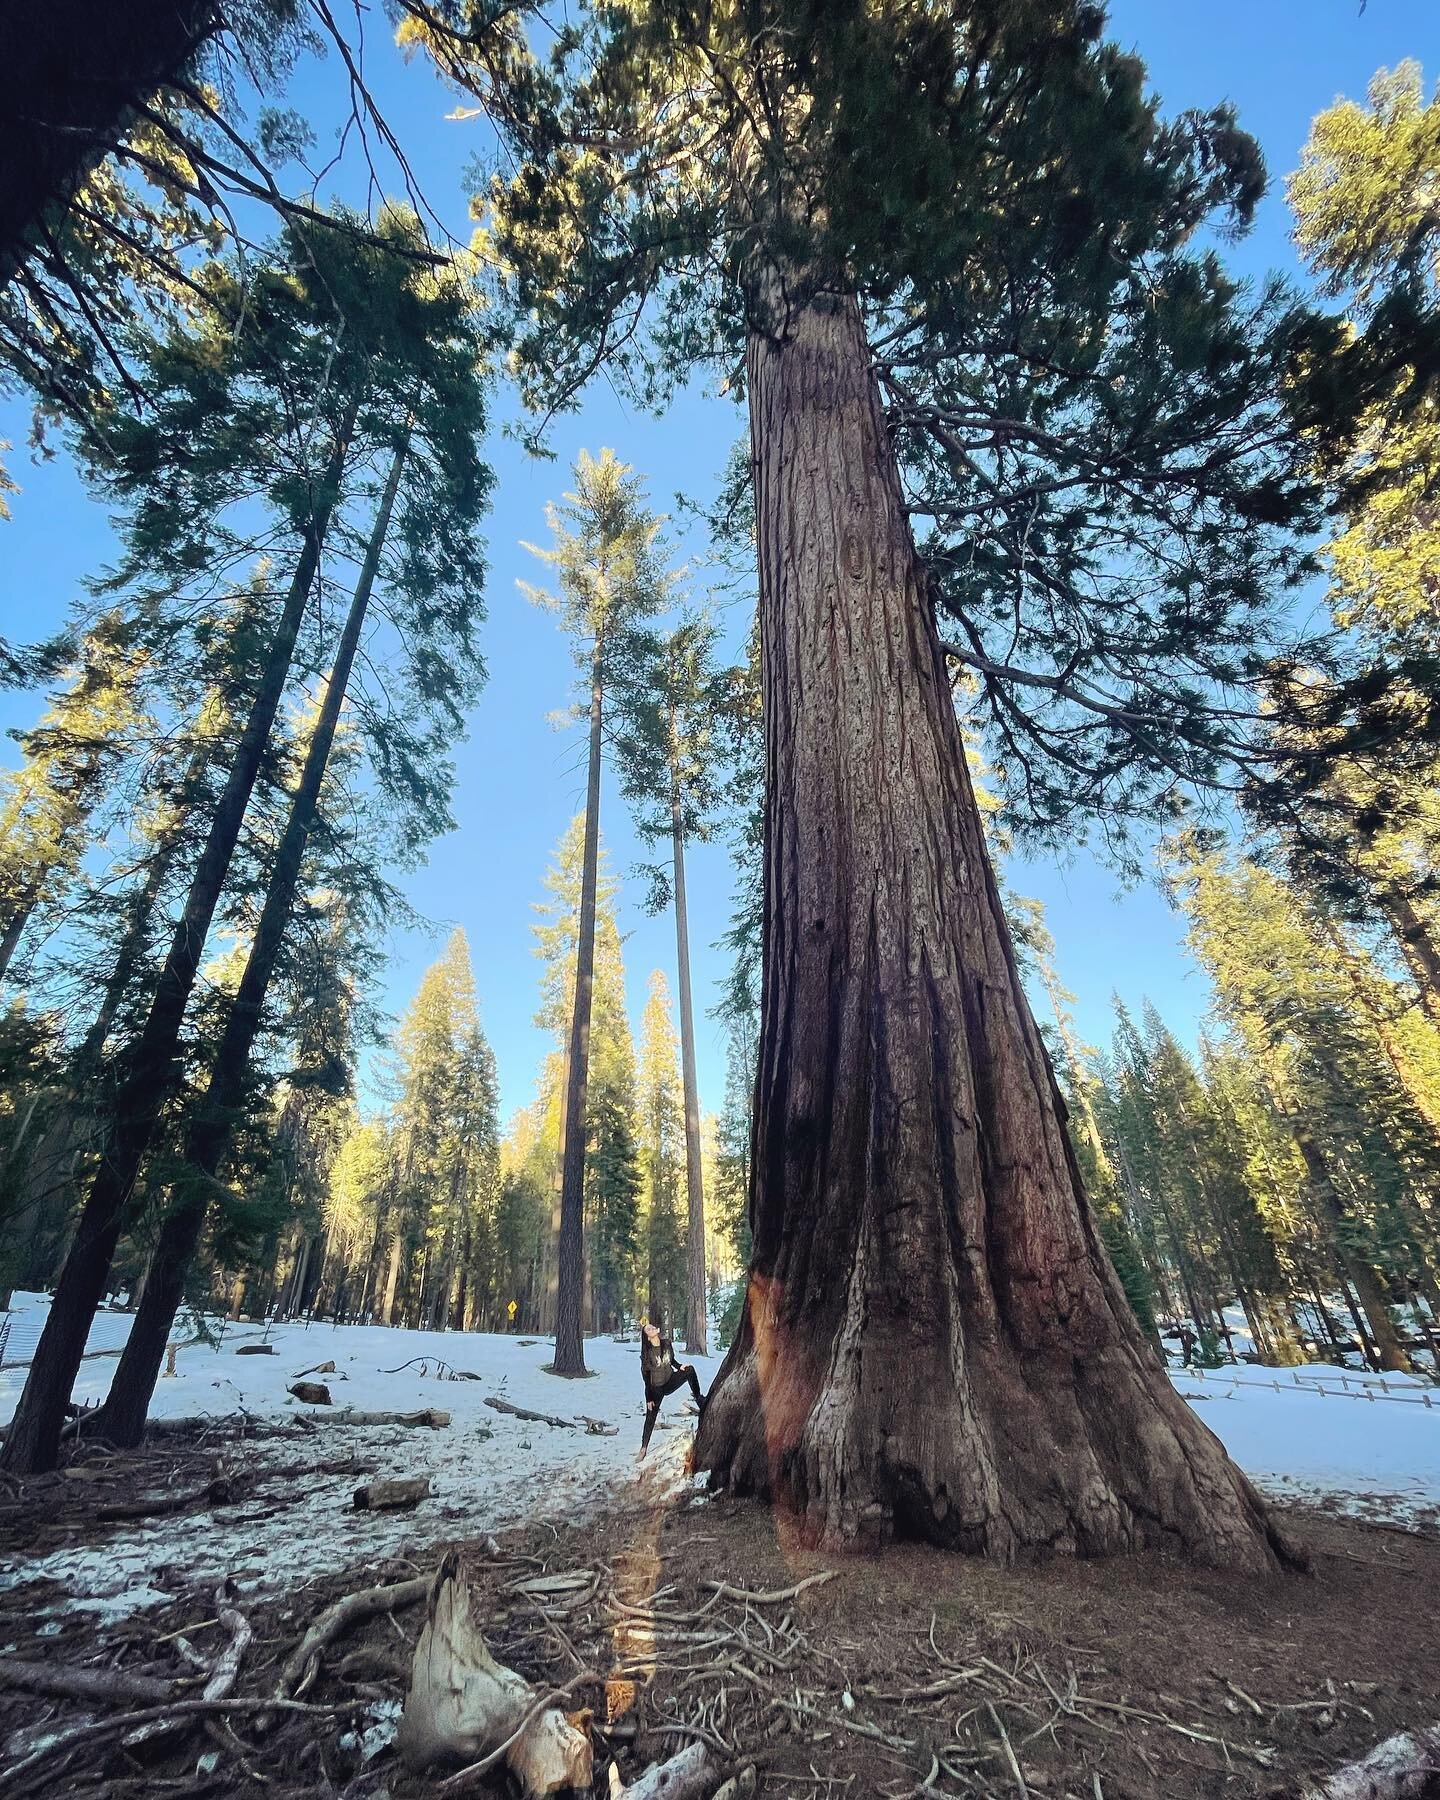 10 years of California - San Francisco 
10 anos!!! 

#yosemite #sequoia #sequoianationalpark #mariposagrove #mariposagroveofgiantsequoias  #grizzlygiant